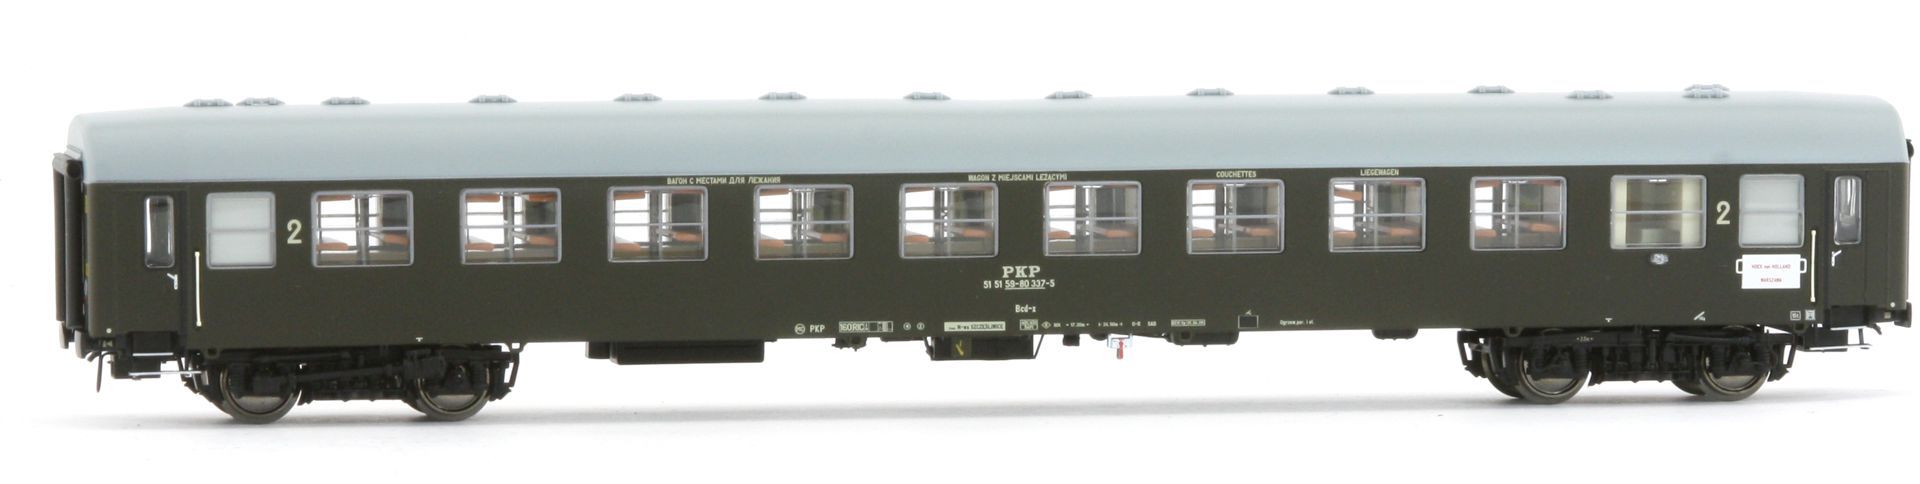 Robo 244051 - Personenwagen 110Ac, PKP, Ep.IV, mit Beleuchtung